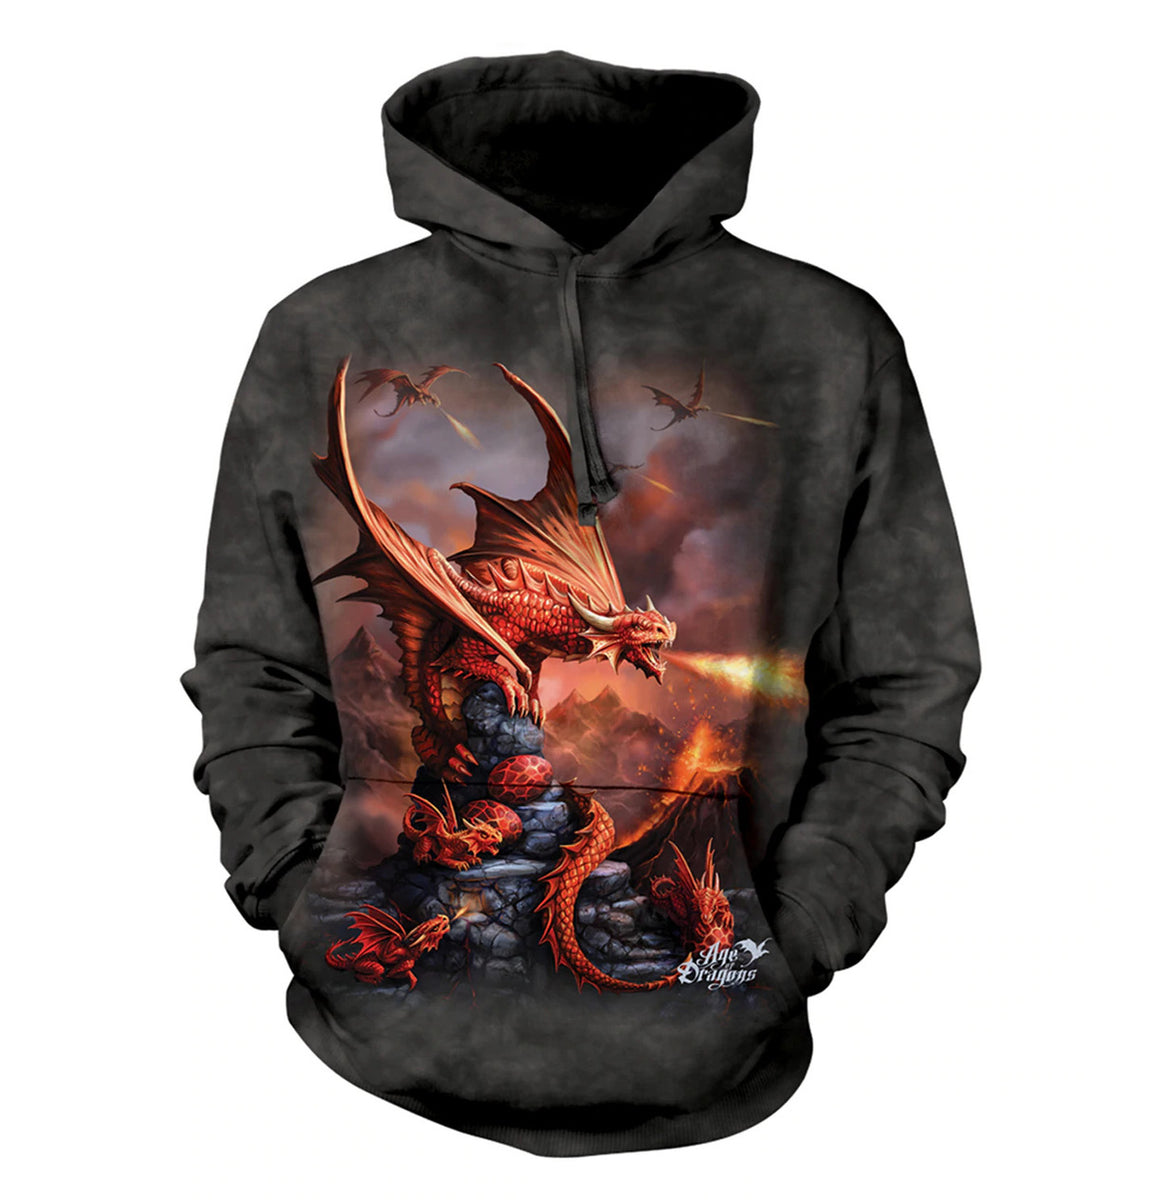 Fire Dragon - The Mountain - Adult Unisex Hoodie Sweatshirt ...